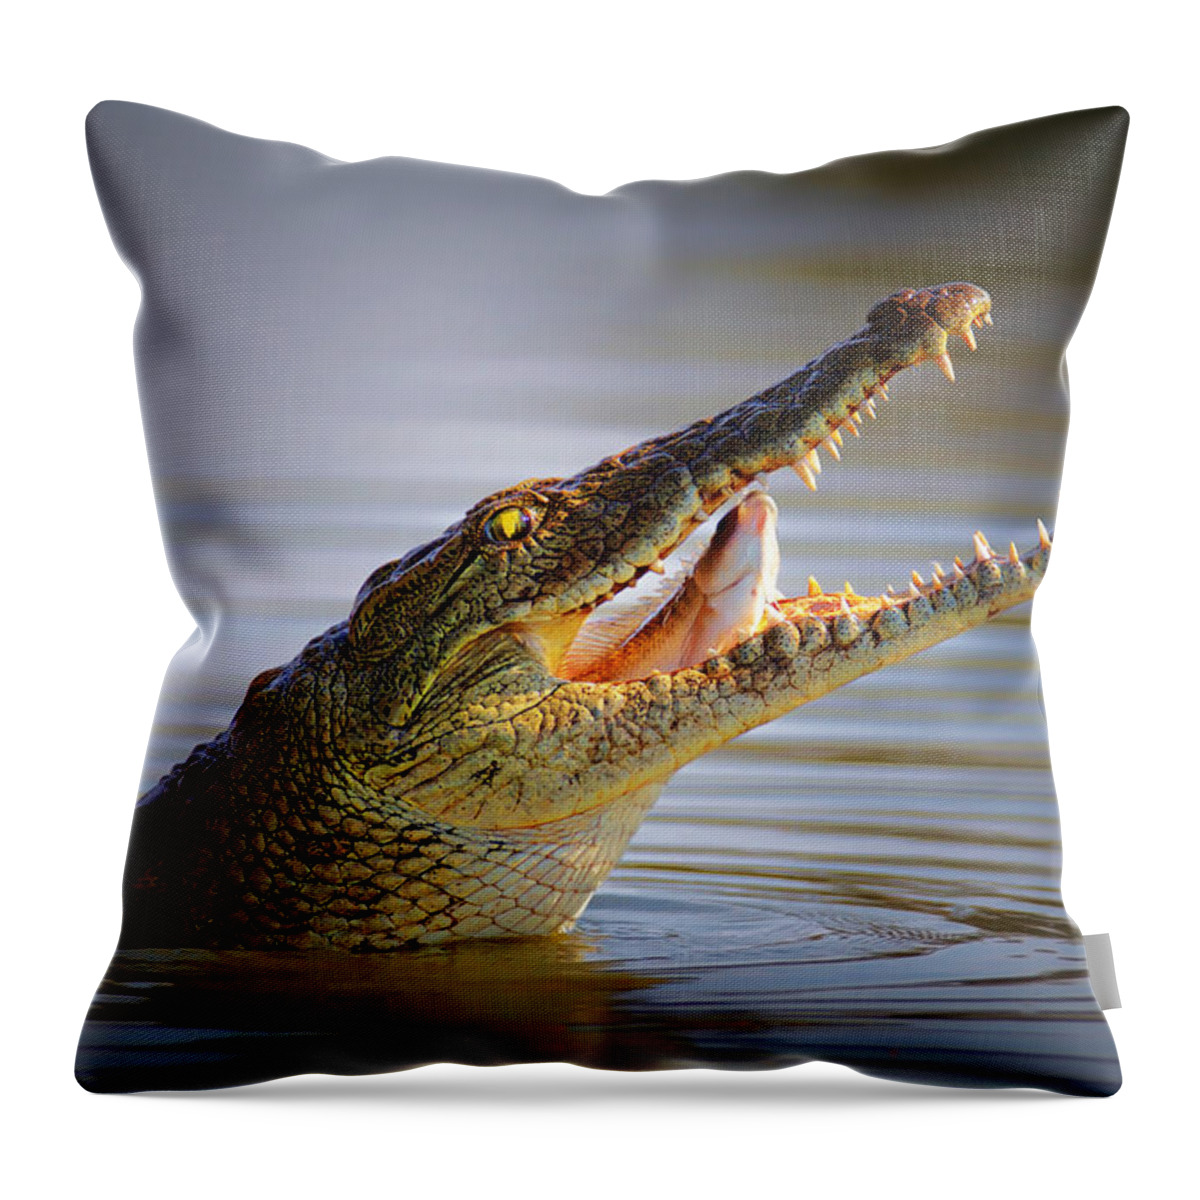 Crocodile Throw Pillow featuring the photograph Nile crocodile swollowing fish by Johan Swanepoel